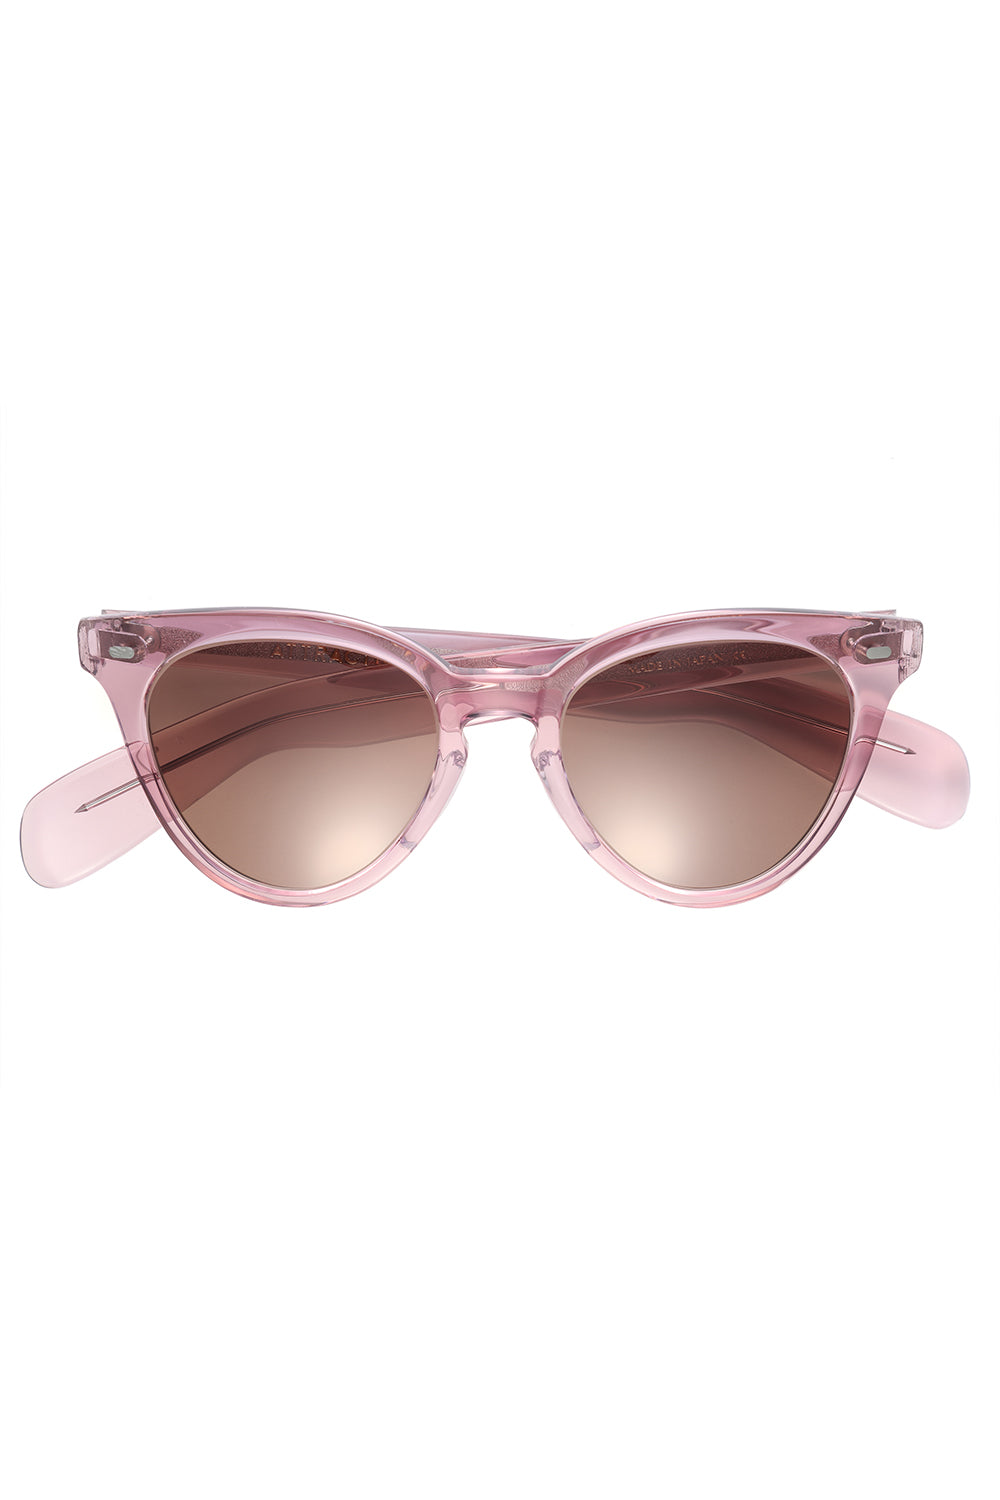 AE0002 Eyewear ”Delta” -Pink Frame-